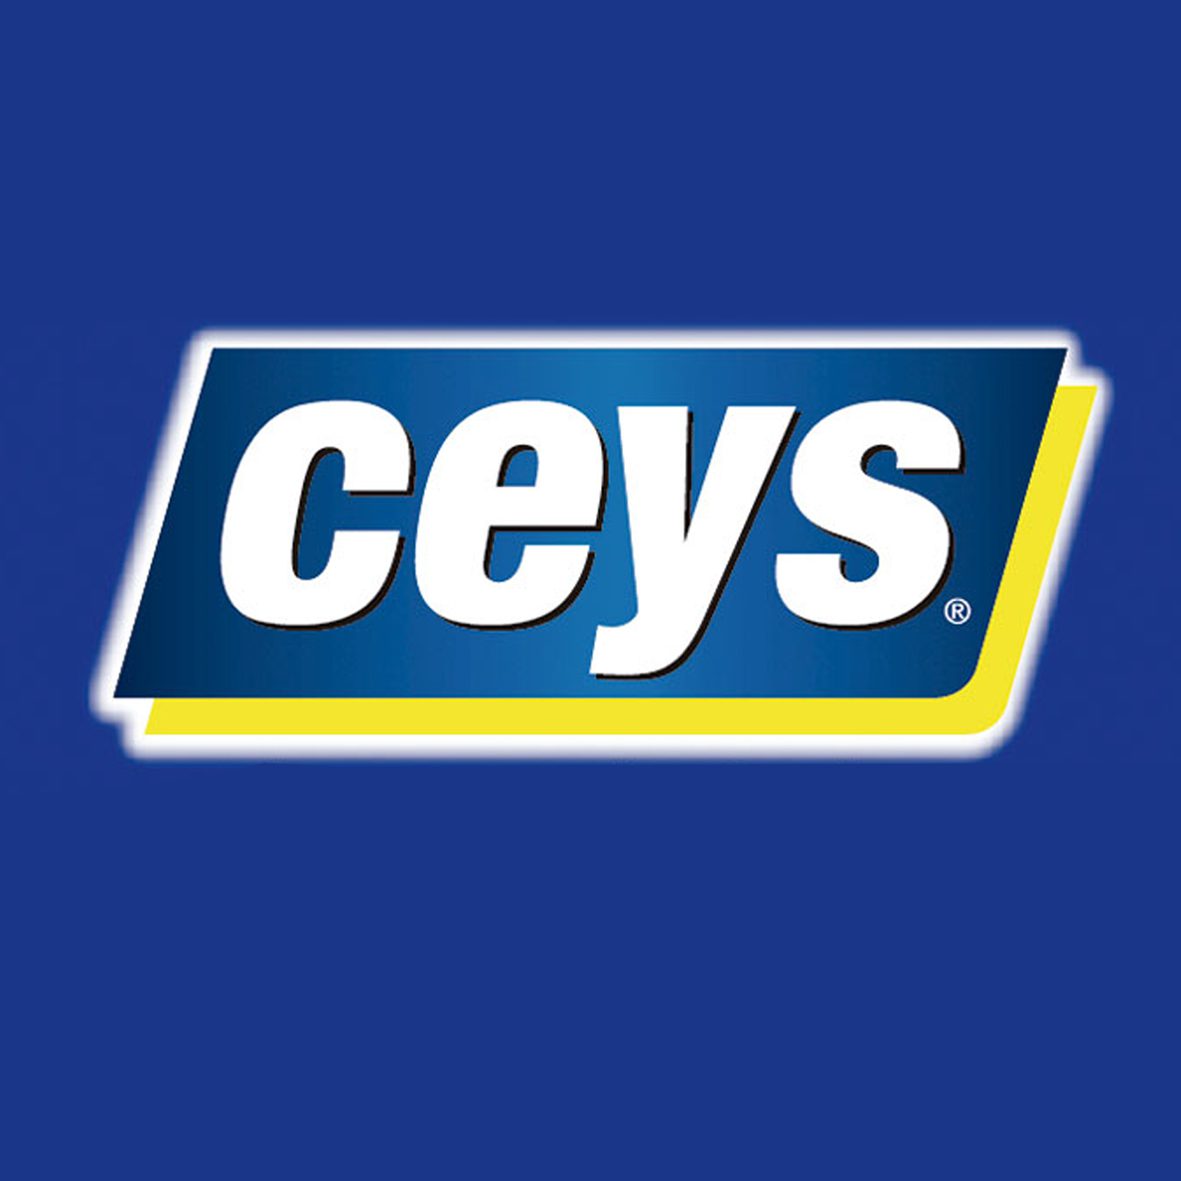 Ceys logo